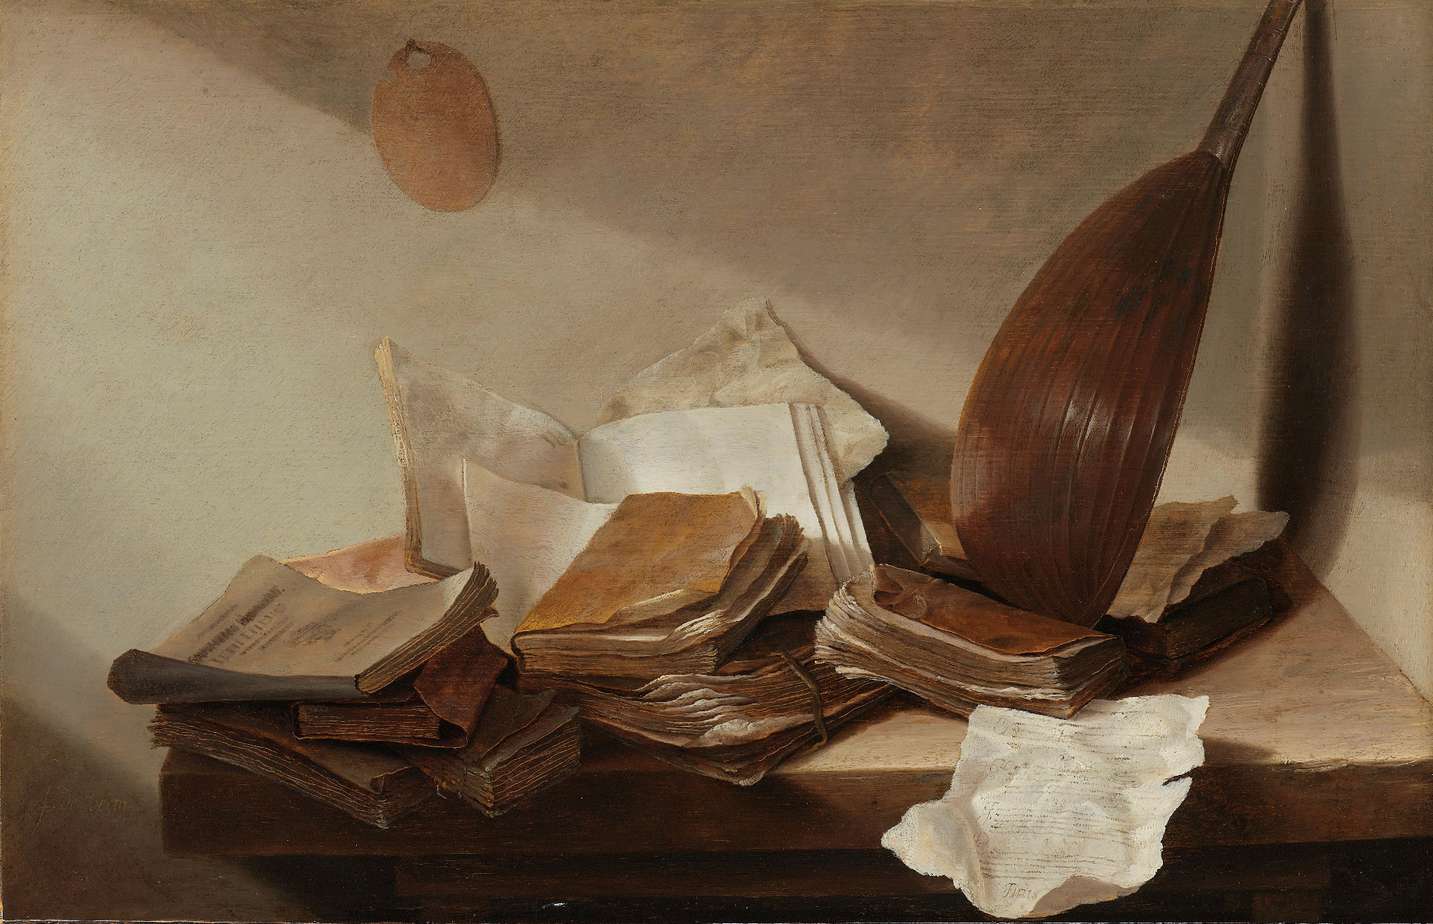 Still Life with Books, Jan Davidsz. de Heem, 1625 - 1630, fleetingness of life